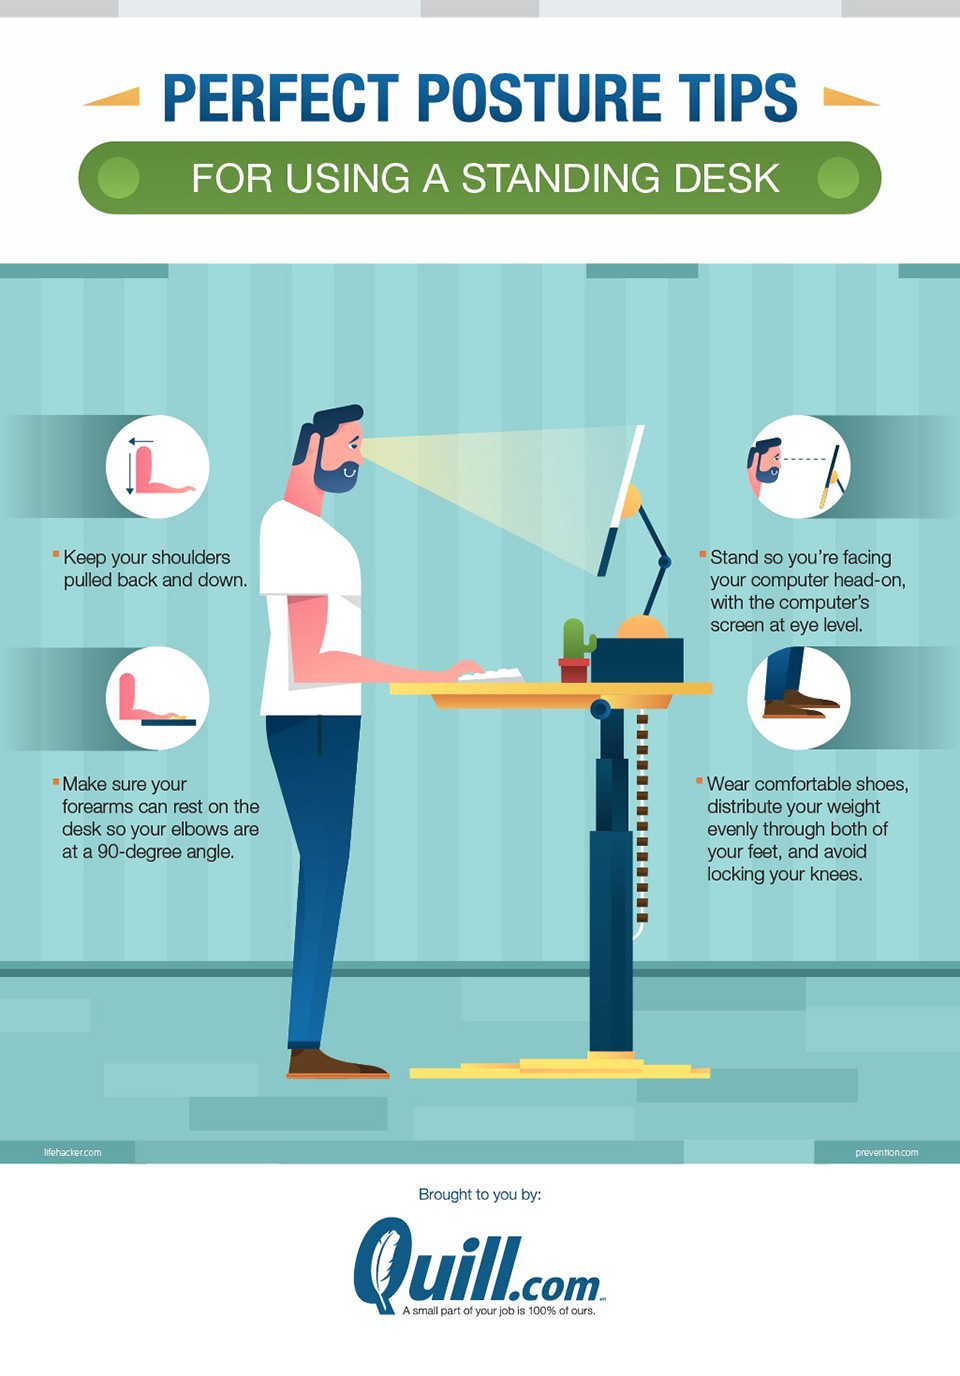 The Benefits of Standing Desks | Quill.com